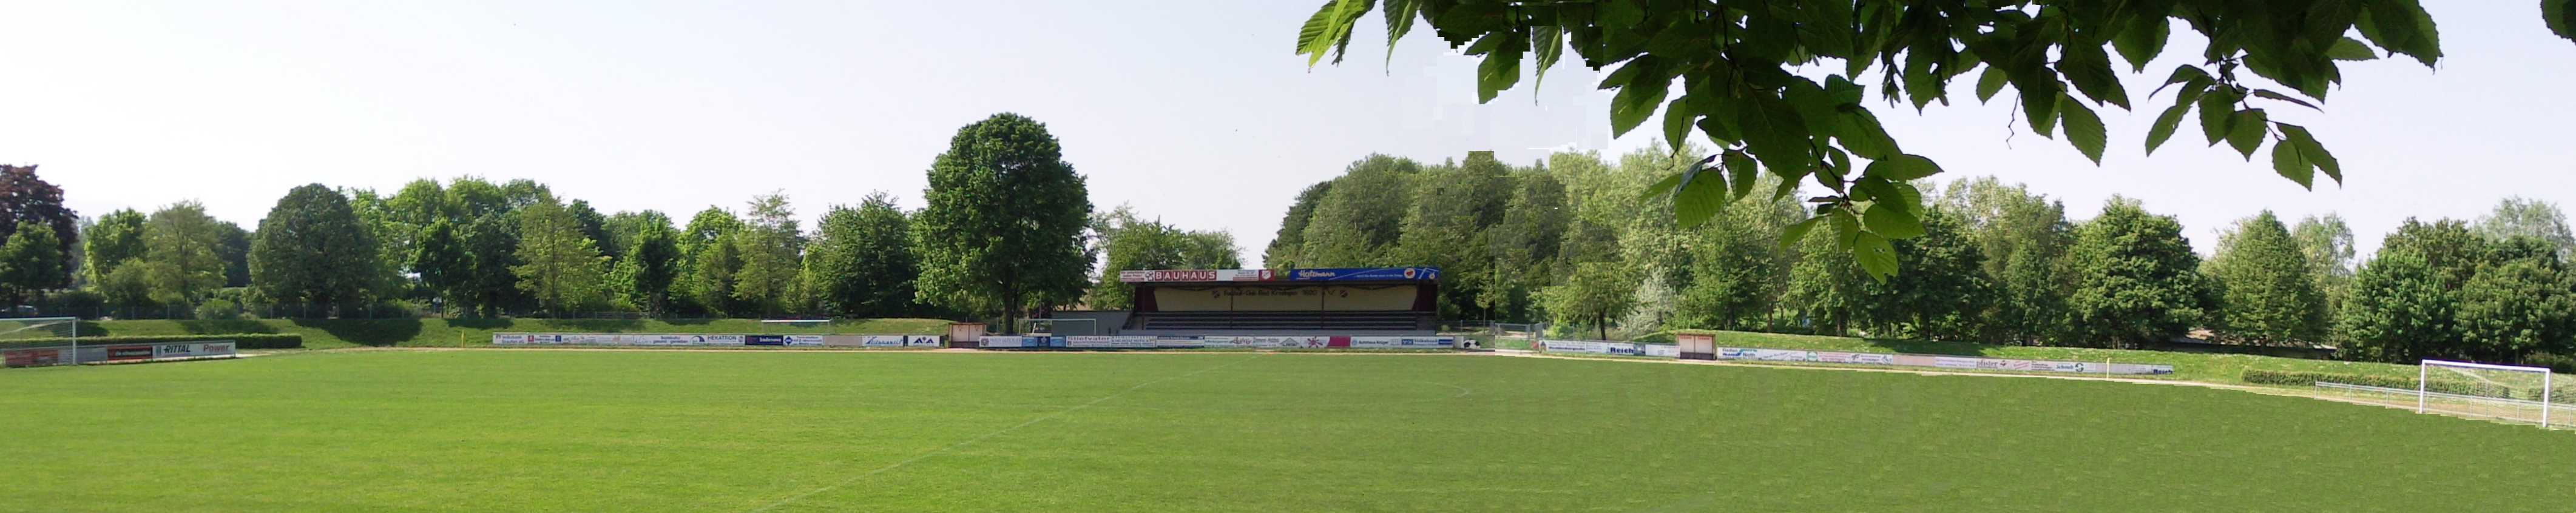 FCK-Erlenmattenstadion_2011 .jpg